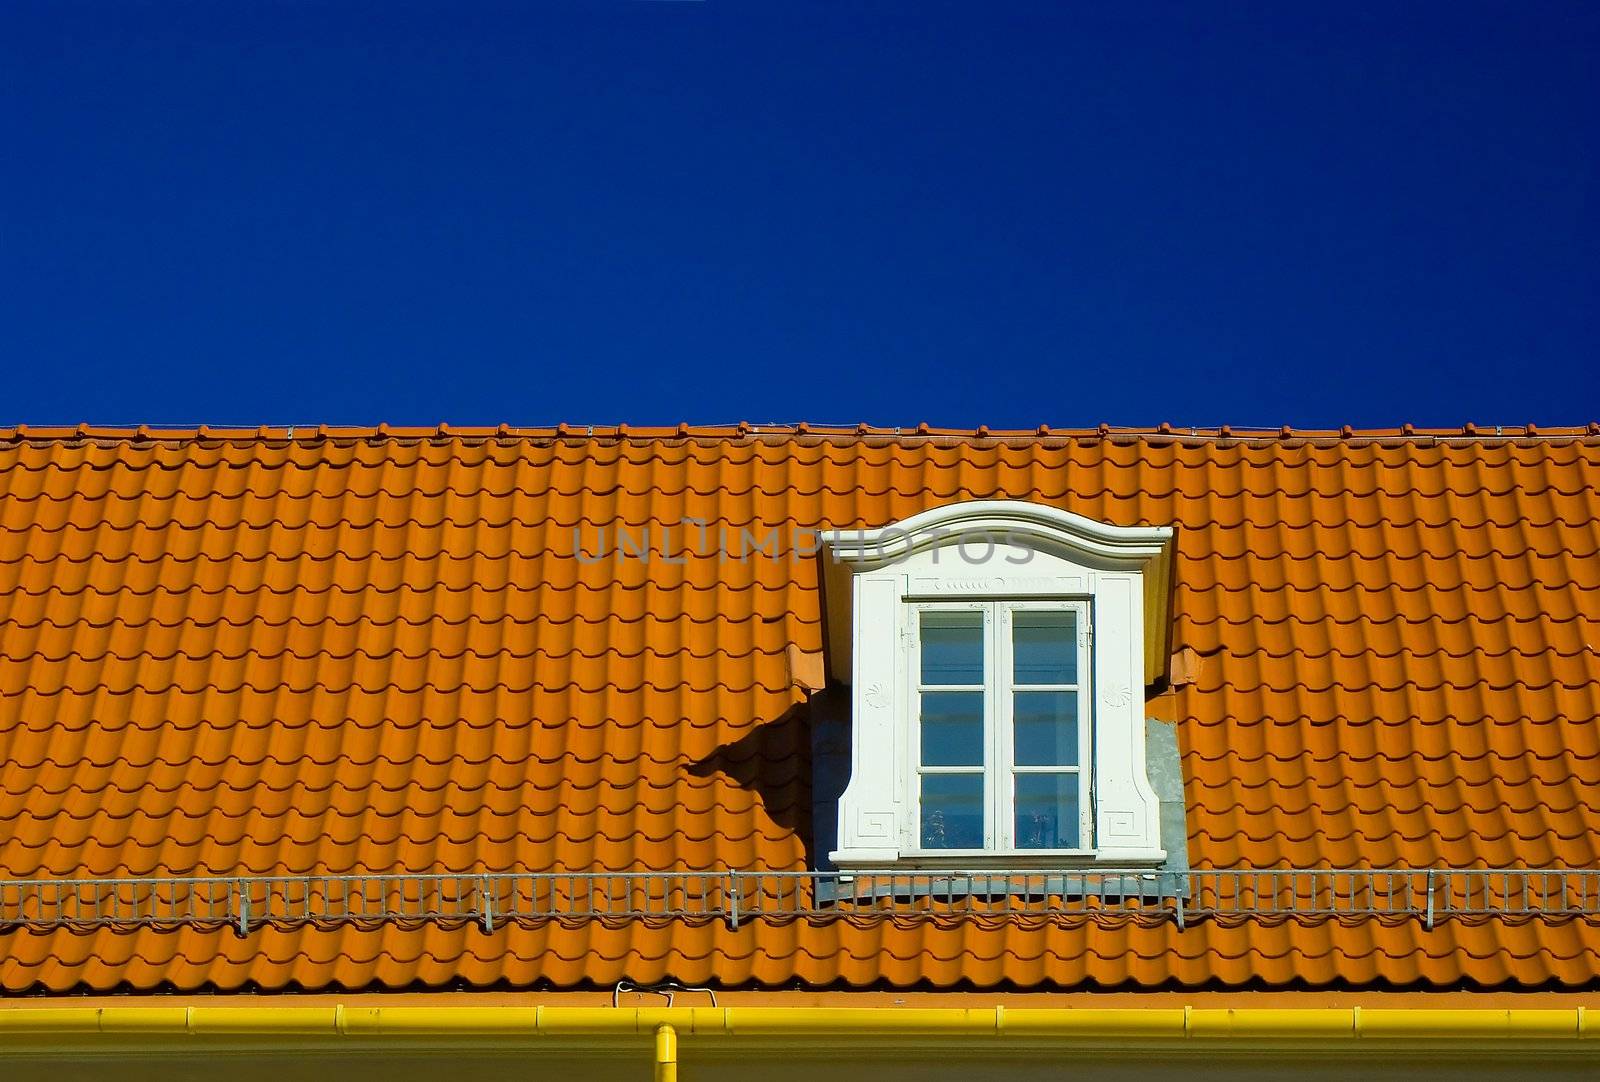 Dormer roof window, in a flashing orange tiled roof on blue sky